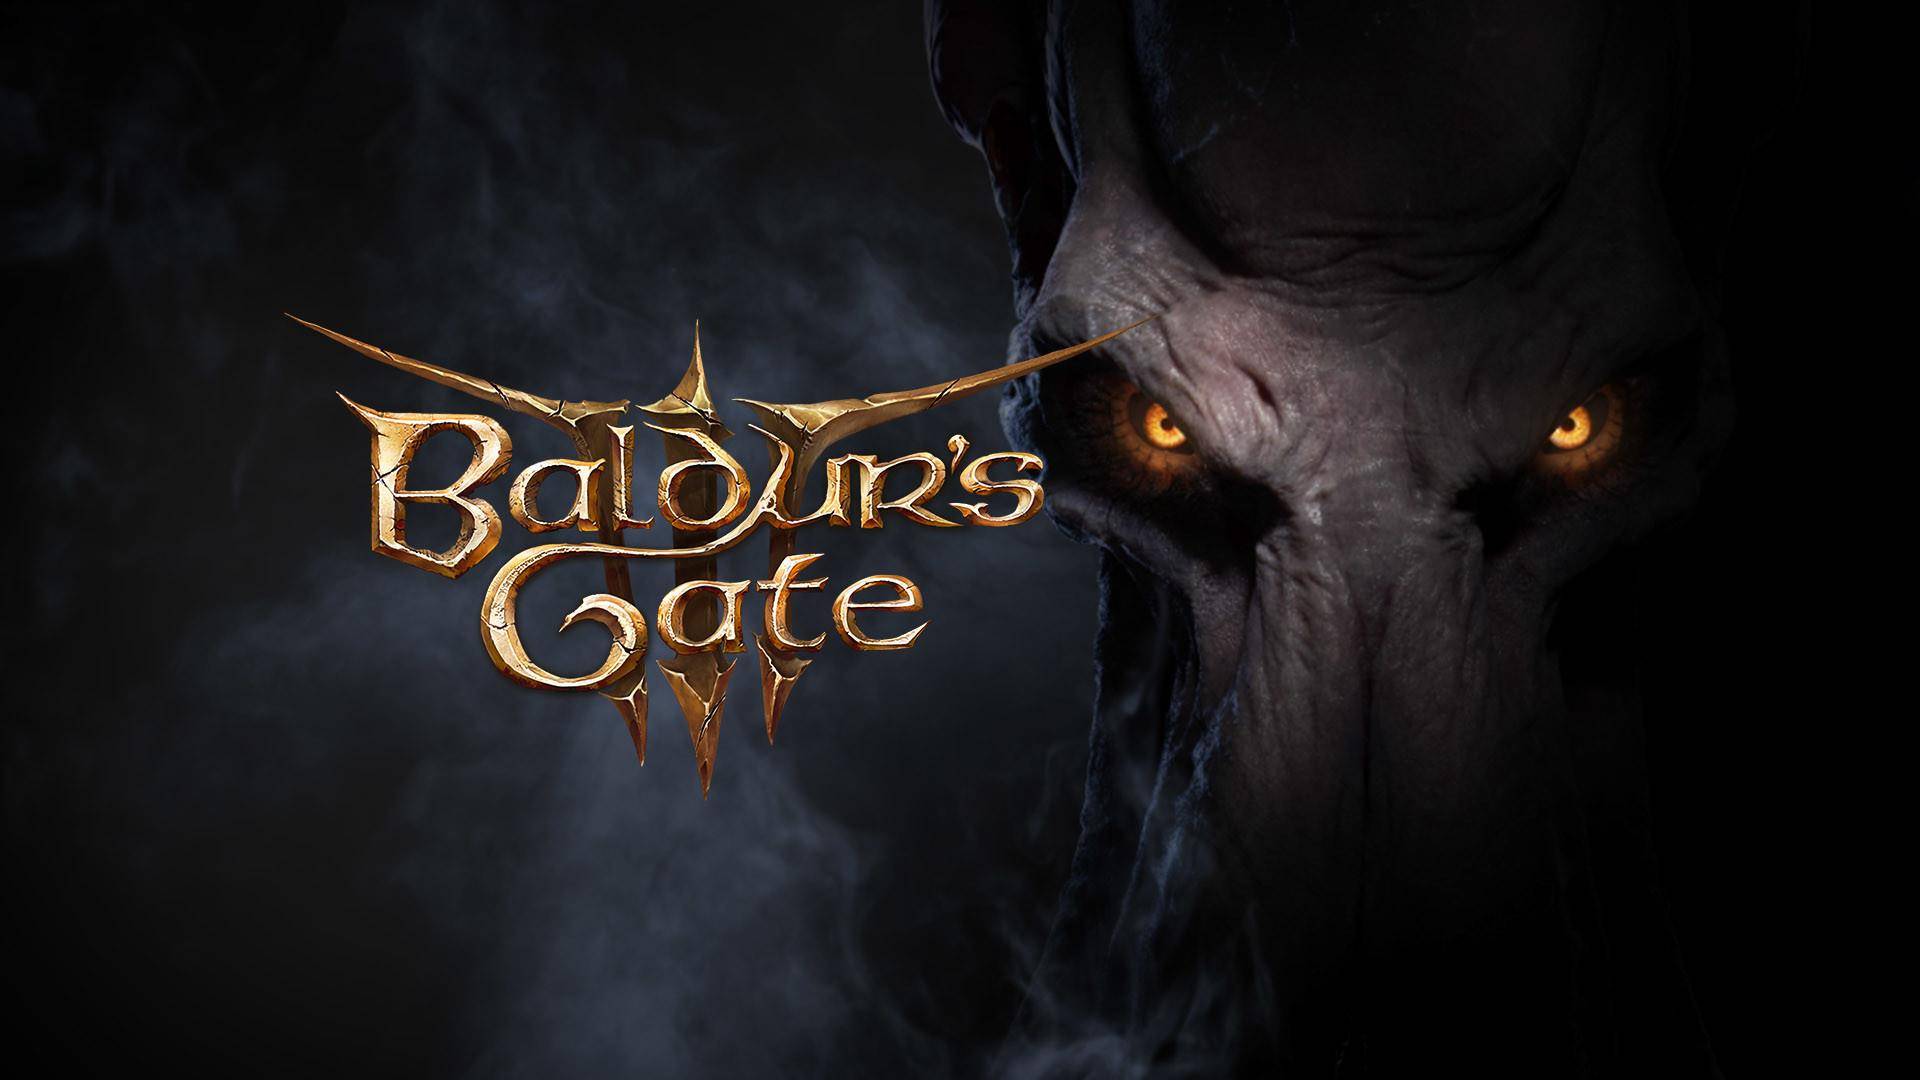 Baldur's Gate III: a release planned for 2020?